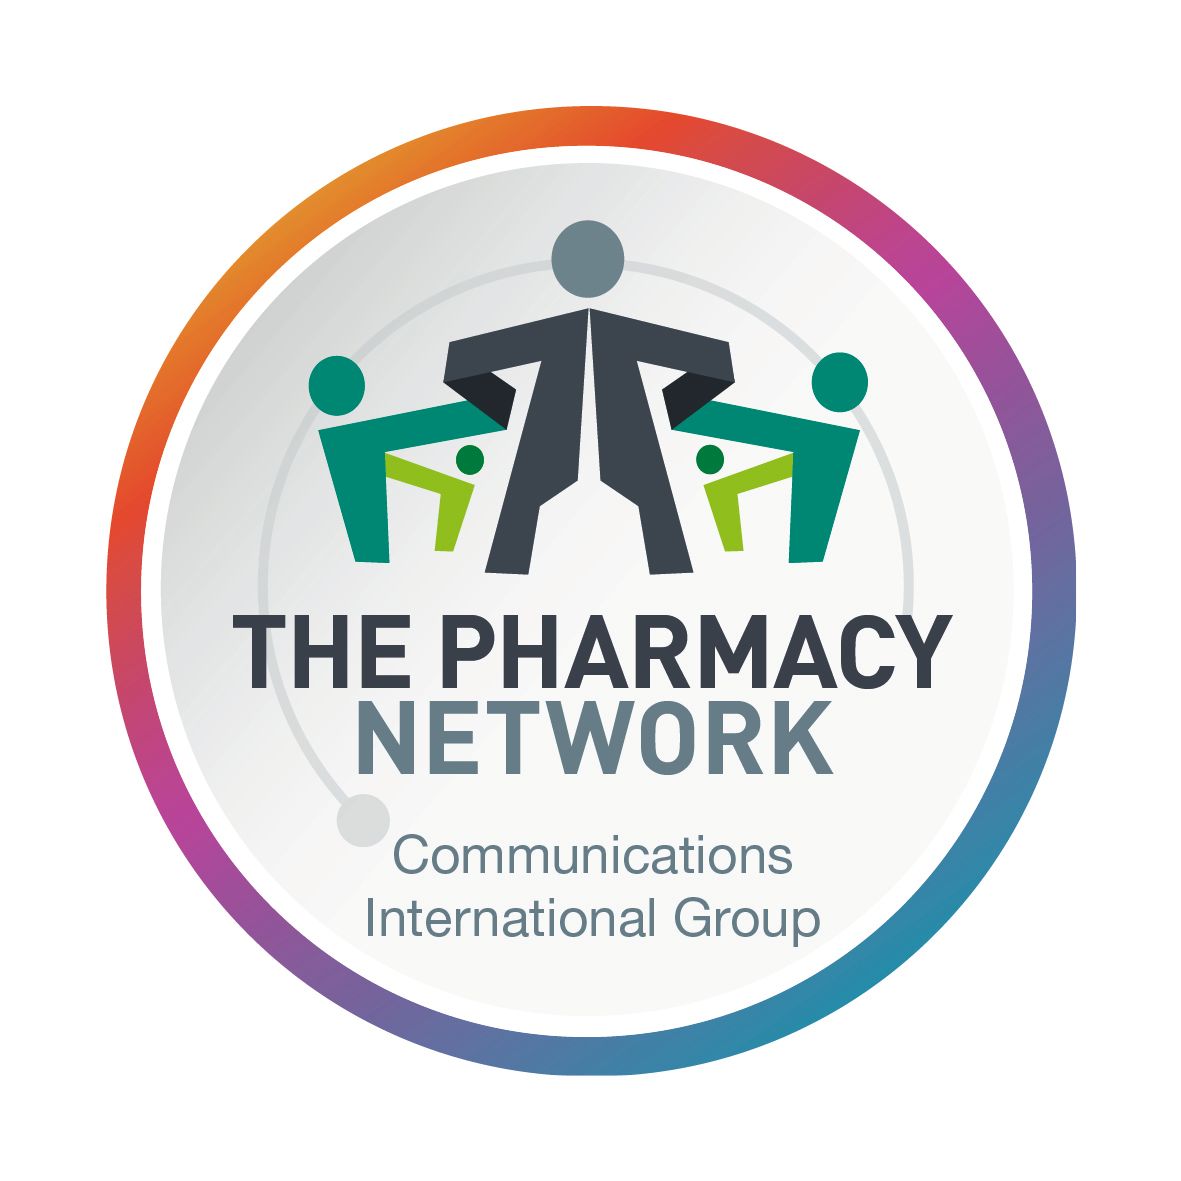 The Pharmacy Network